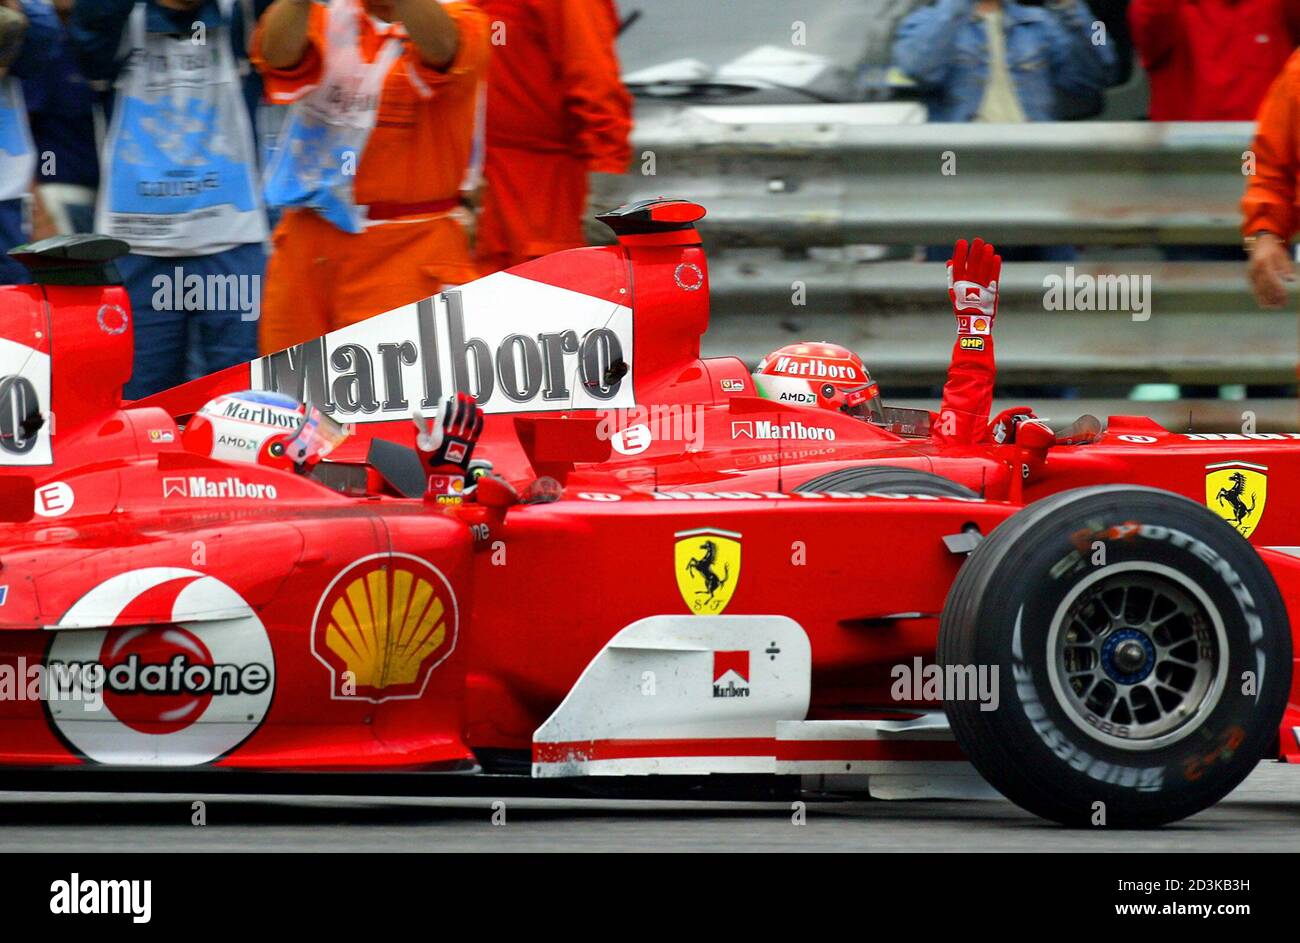 Ferrari Formula One World Champion Driver Michael Schumacher Of Germany R And His Team Mate Brazilian Driver Rubens Barrichello Celebrate At The End Of The Italian Italian Grand Prix At The Monza